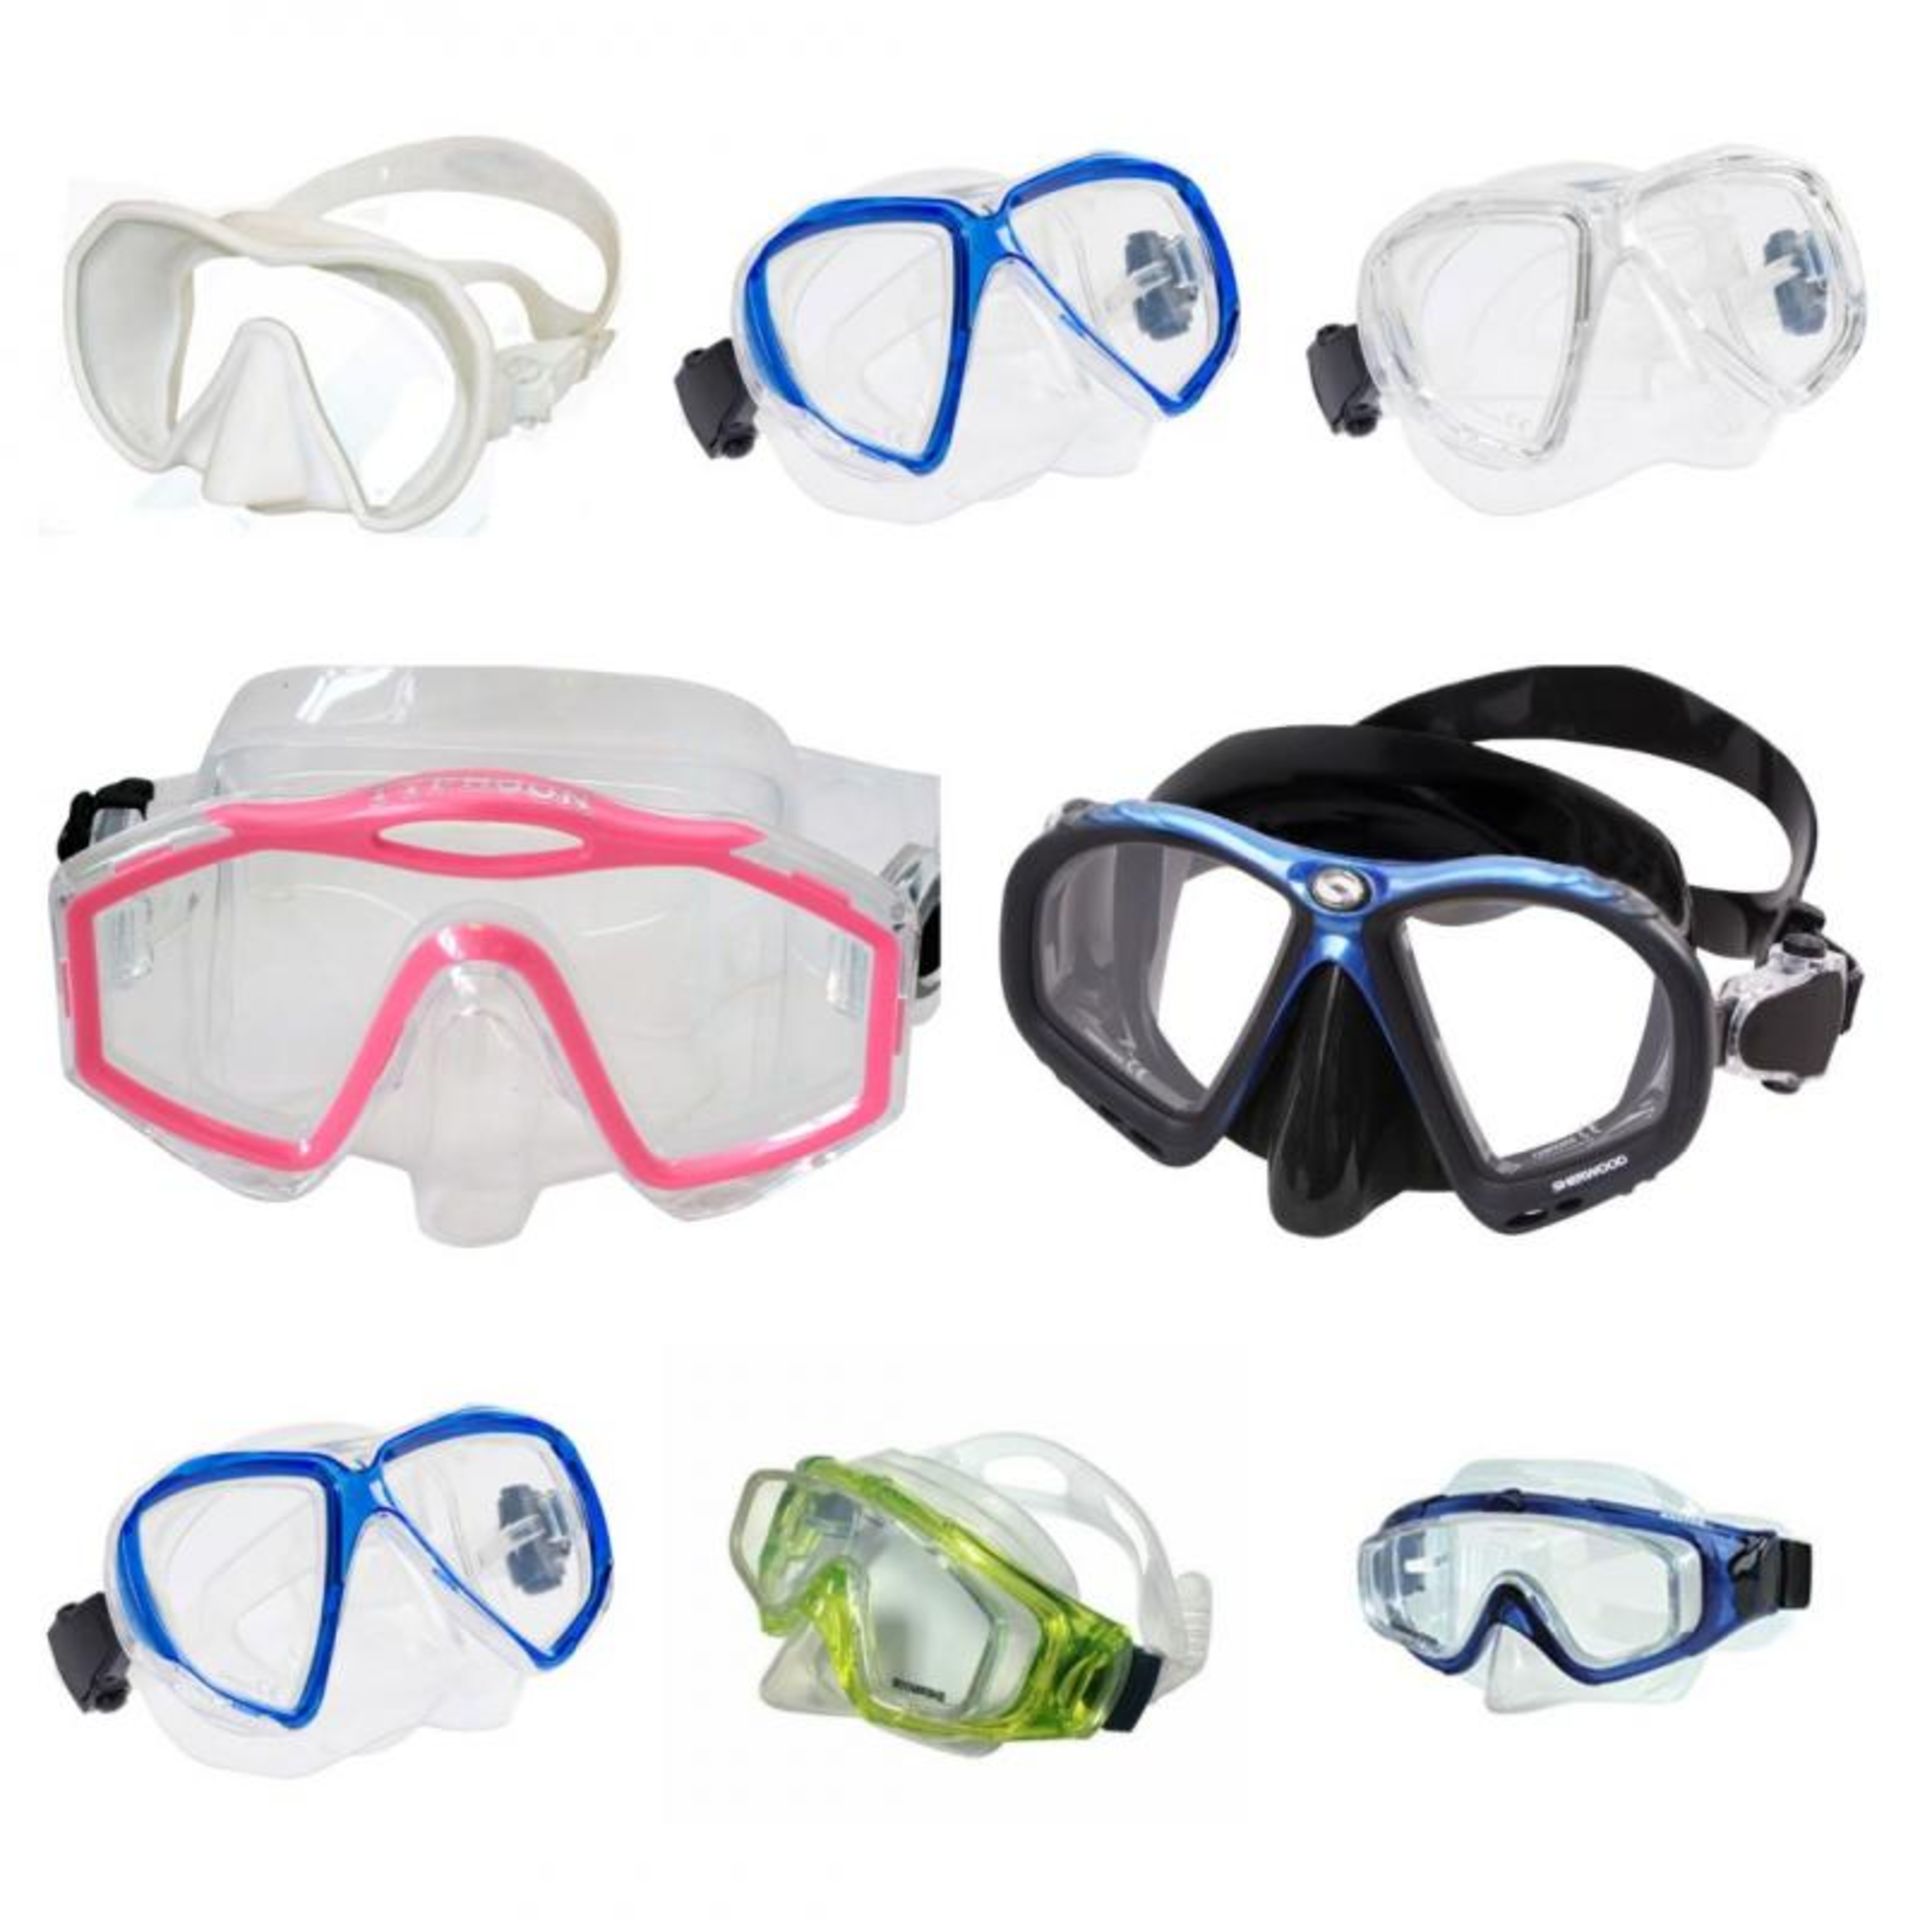 8 x New Pairs Of Branded Diving Masks - Ref: NS397, NS398, NS399, NS400, NS401, NS402, NS403, NS404